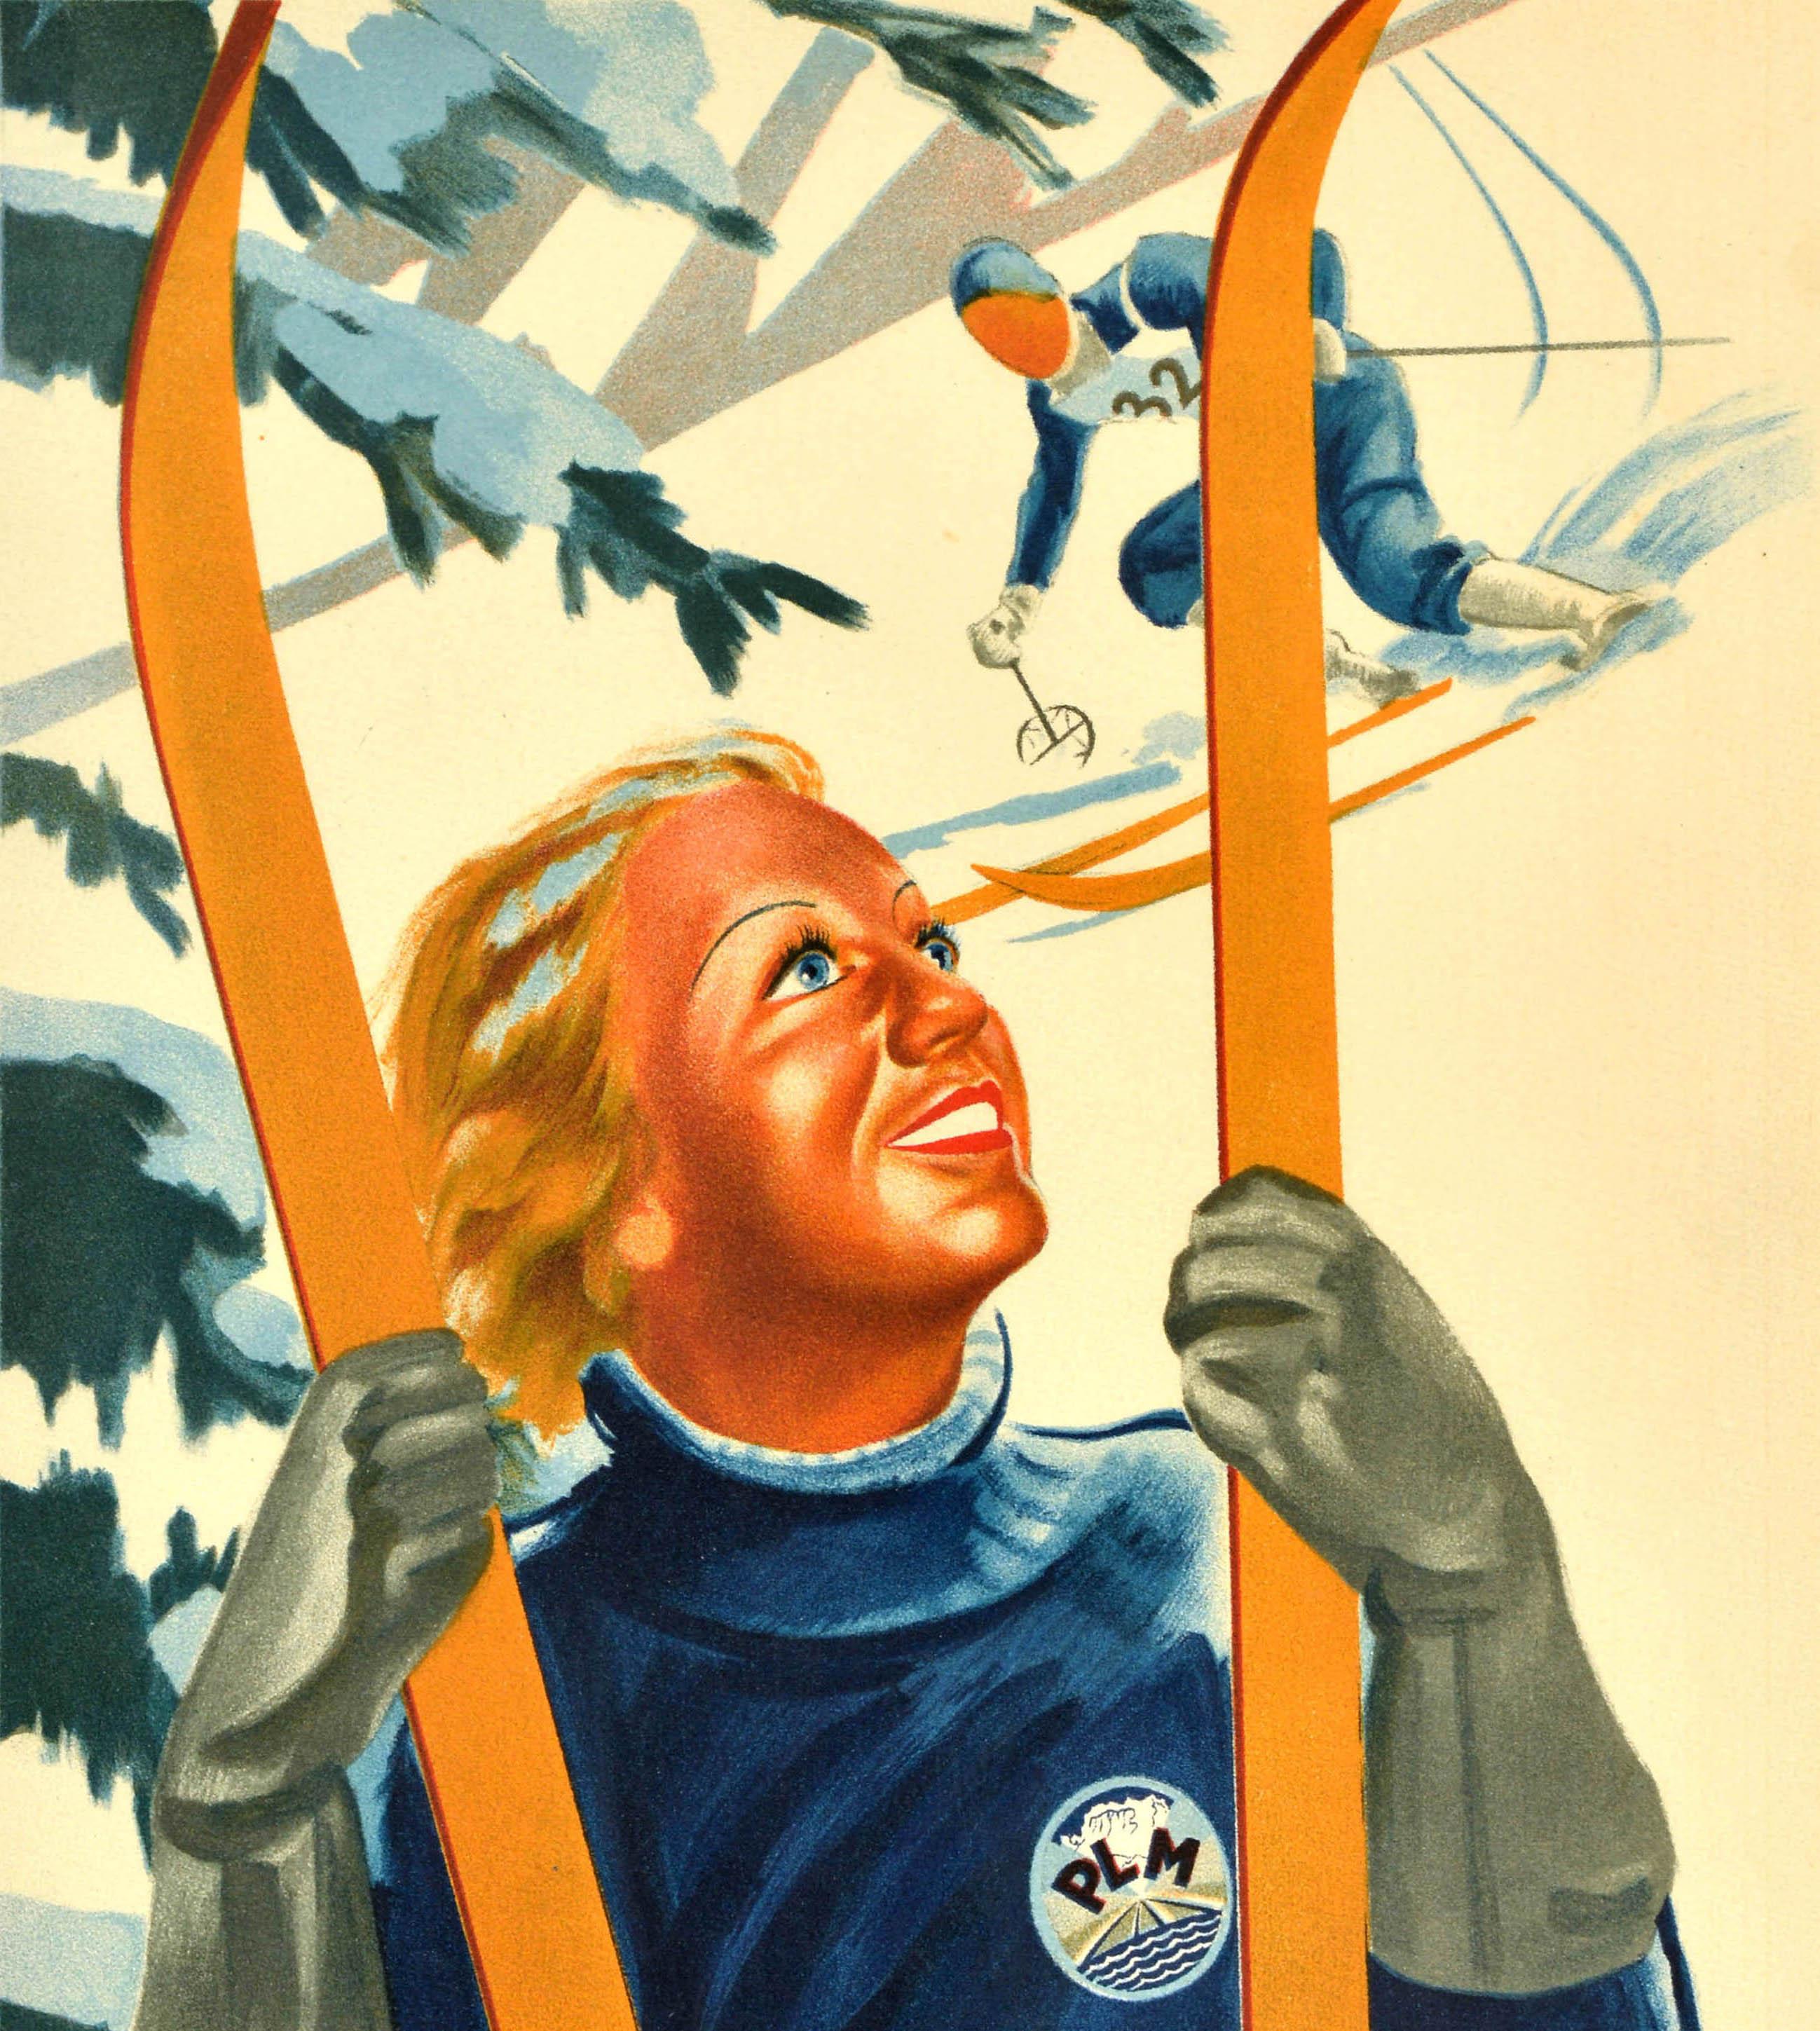 Original Vintage Winter Sport Skiing Travel Poster Alpes And Jura PLM Railway - Orange Print by Unknown